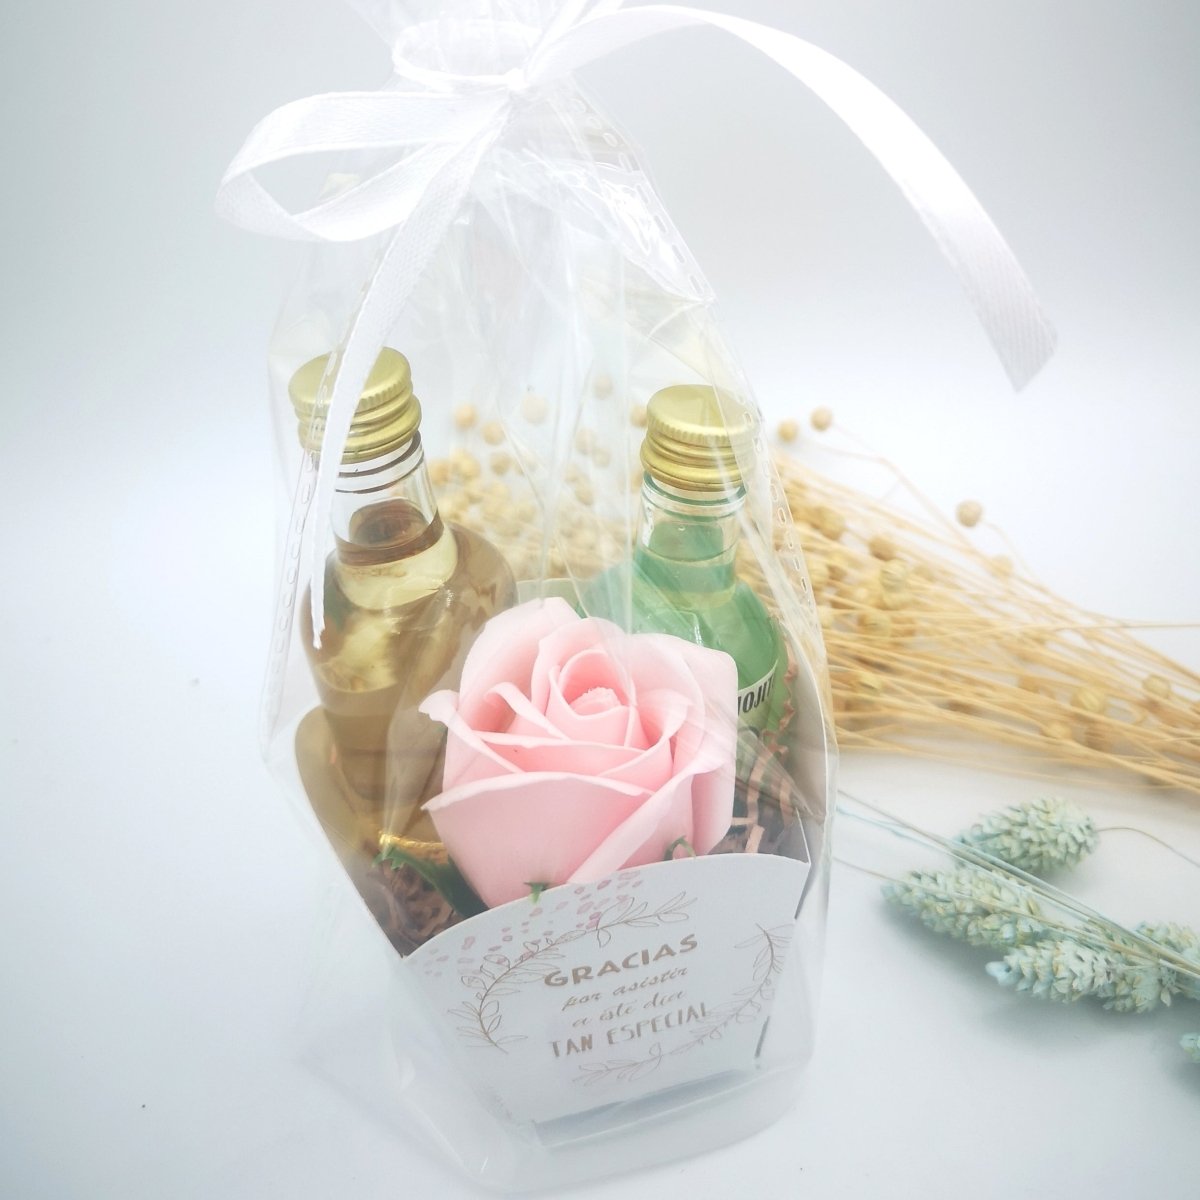 Set minilicores con flor de jabón - Regalo original personalizado - DE MOI À TOI